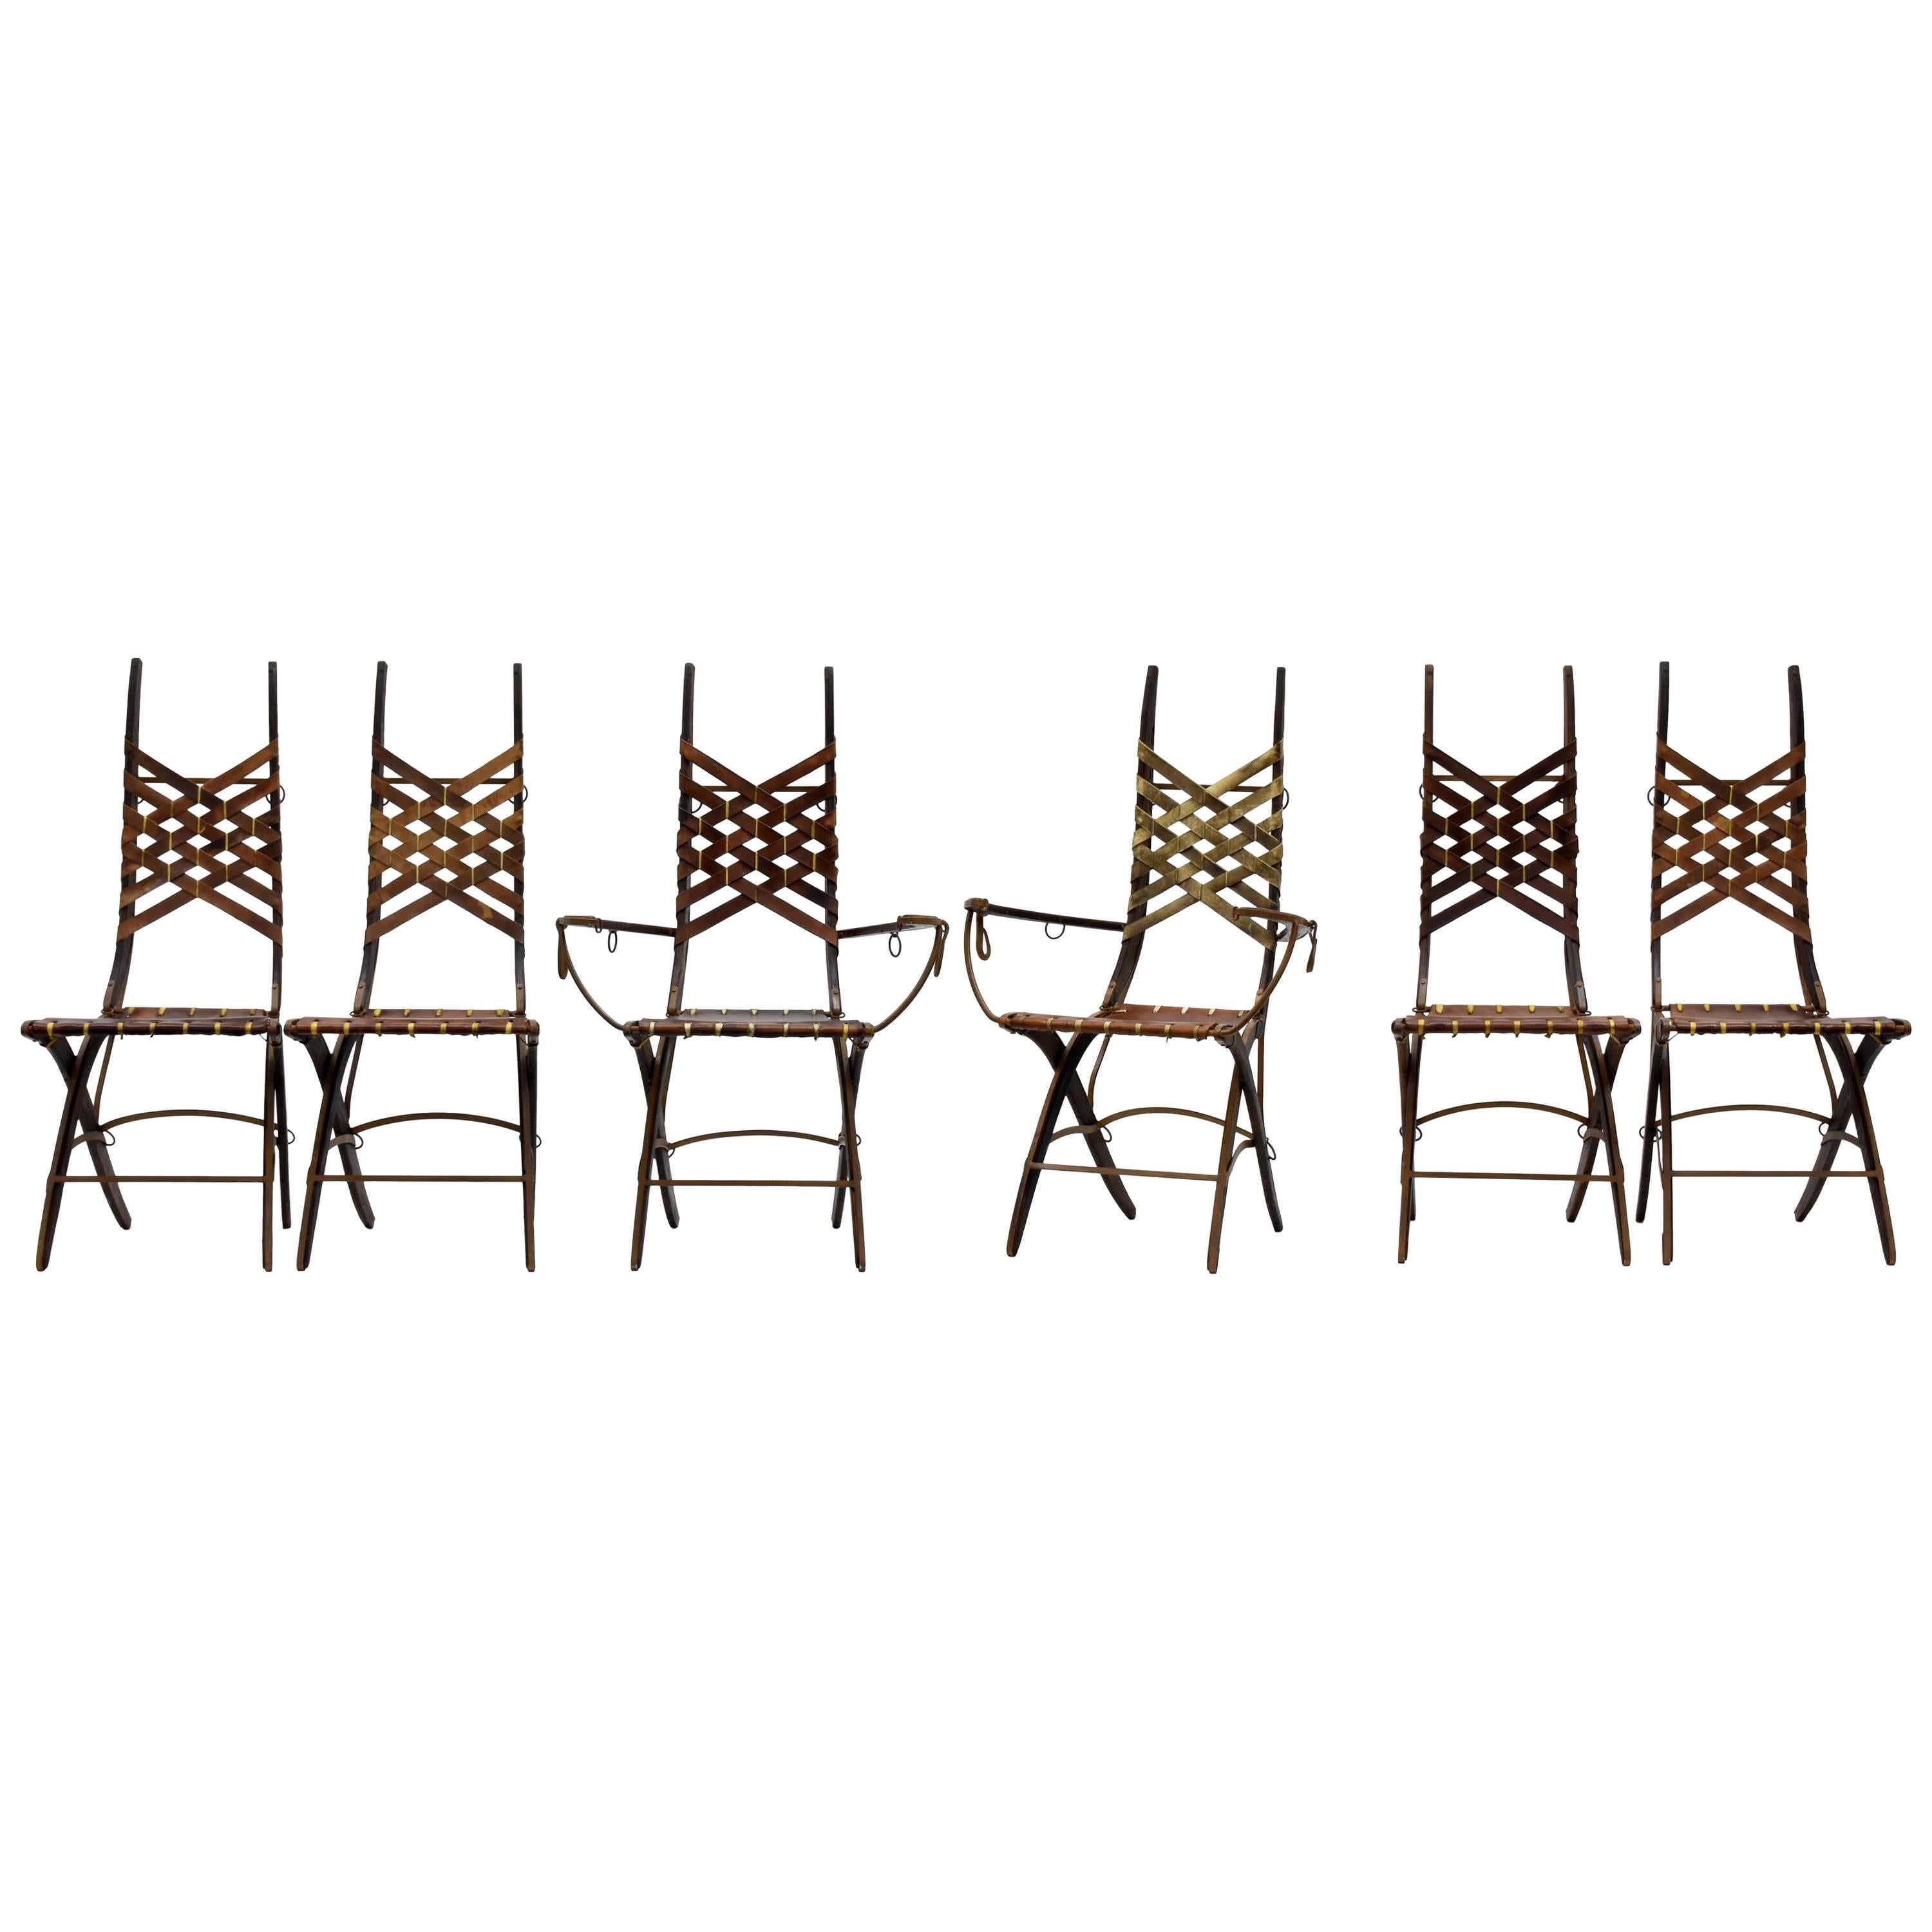 Alberto Marconetti, Six Dining Chairs, Iron, Oak, Leather, Italy, circa 1960